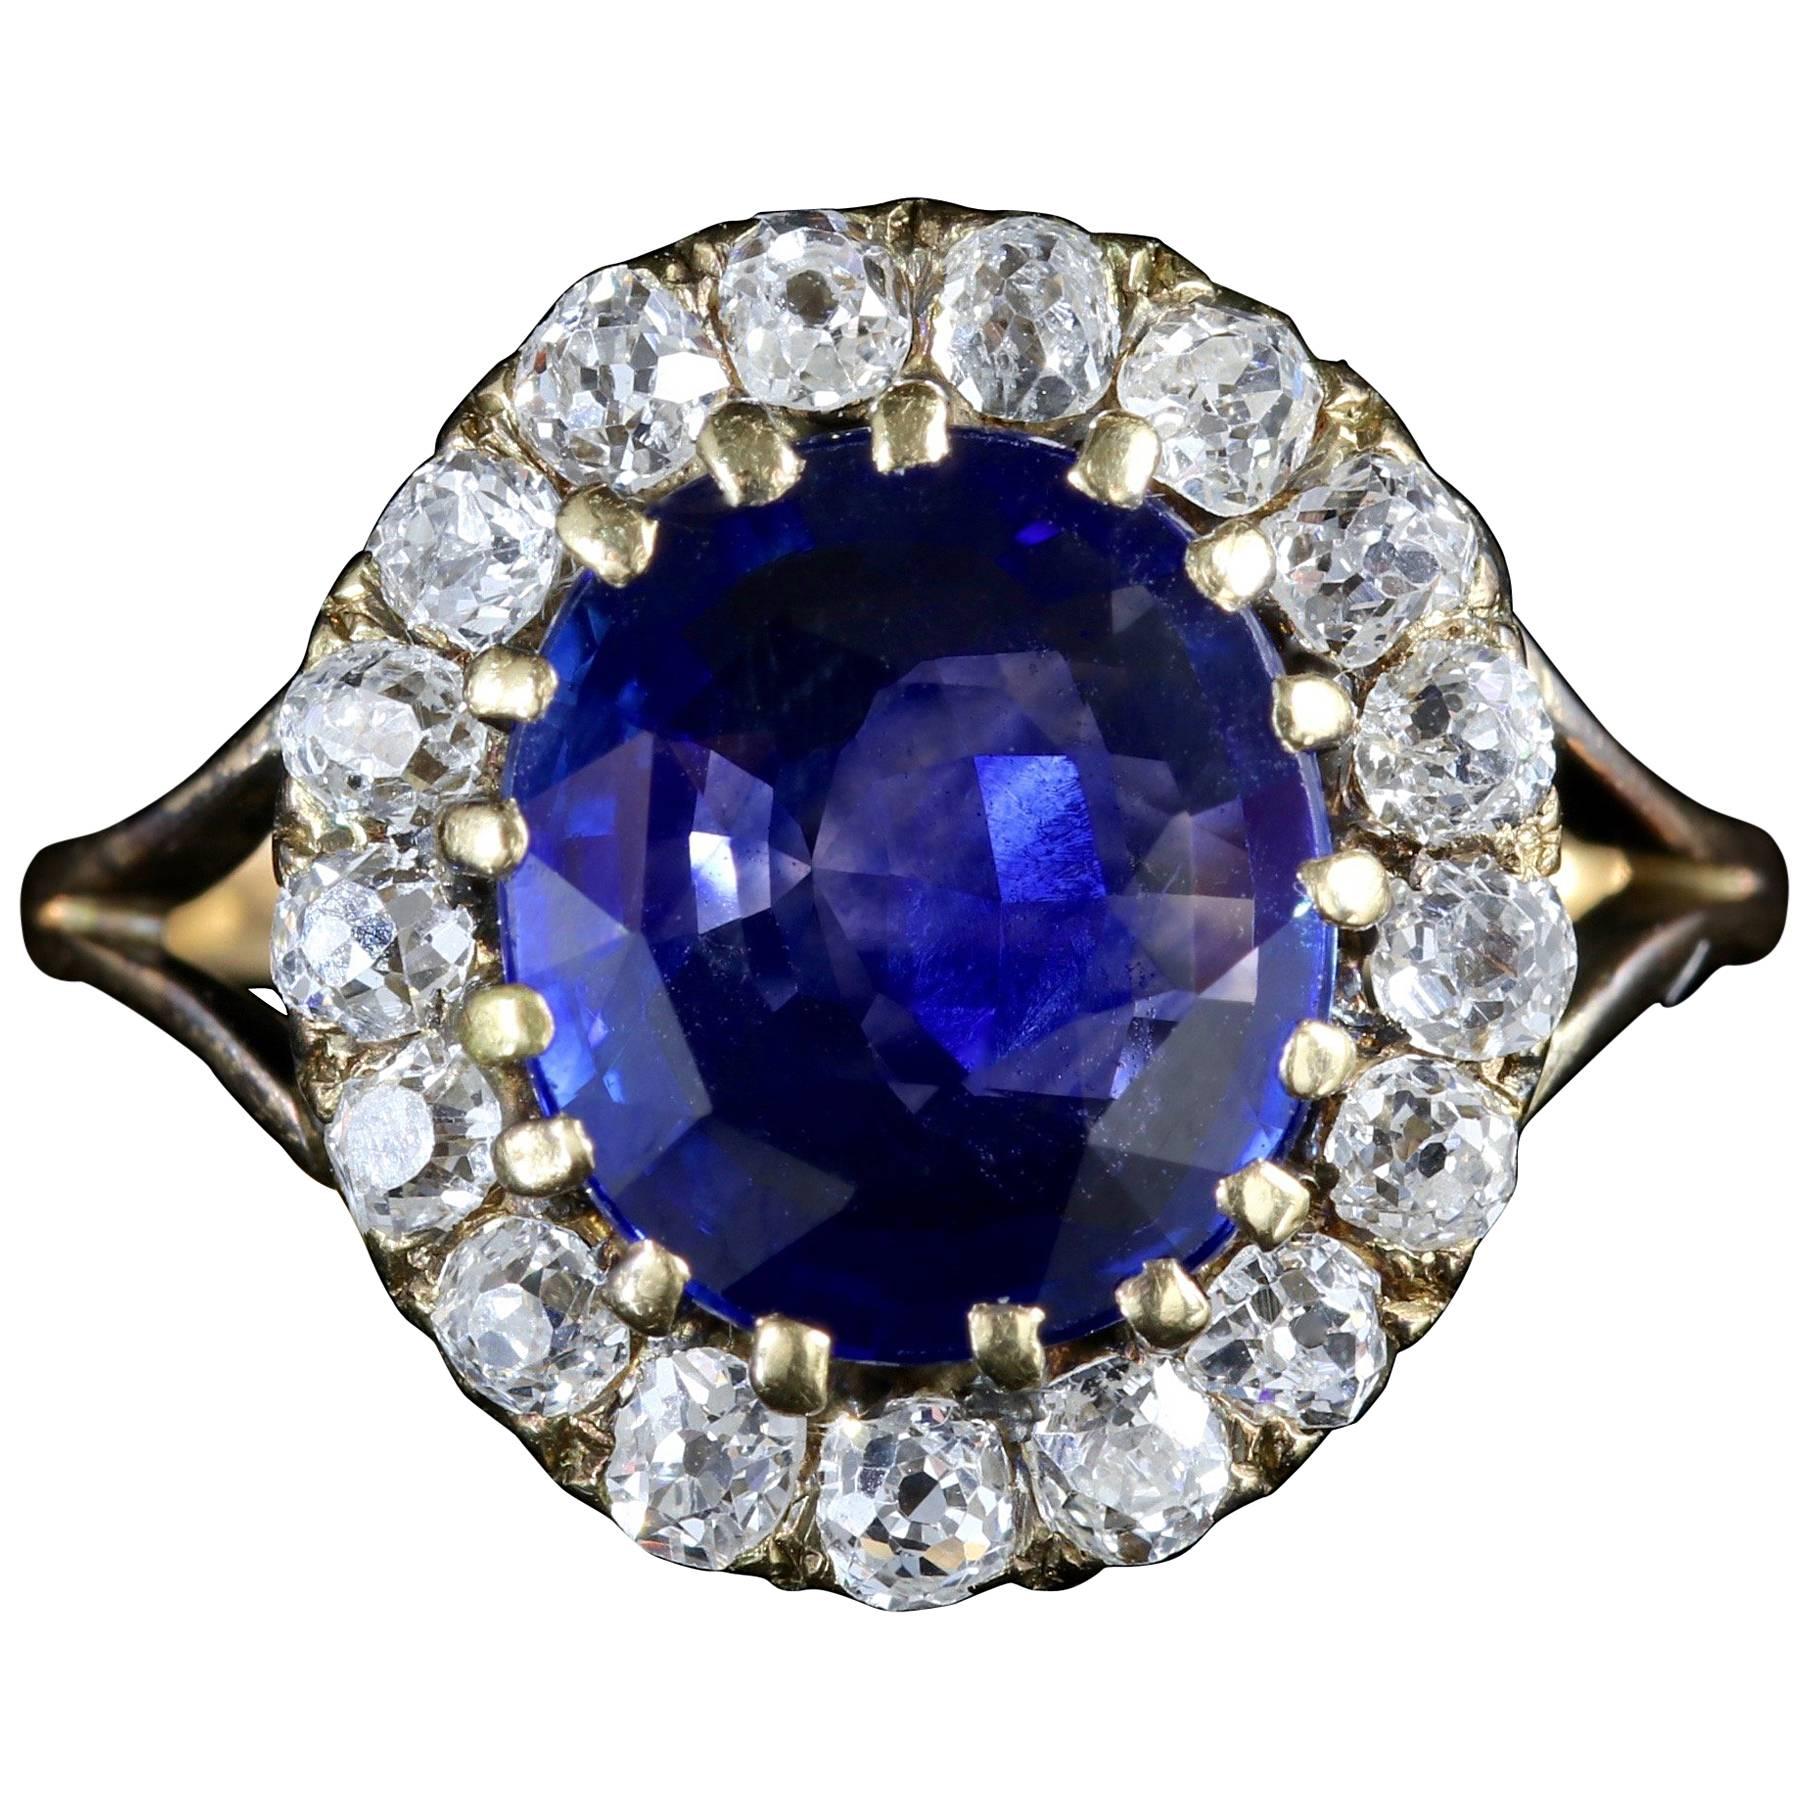 Antique Victorian Sapphire Diamond Cluster Ring, circa 1880